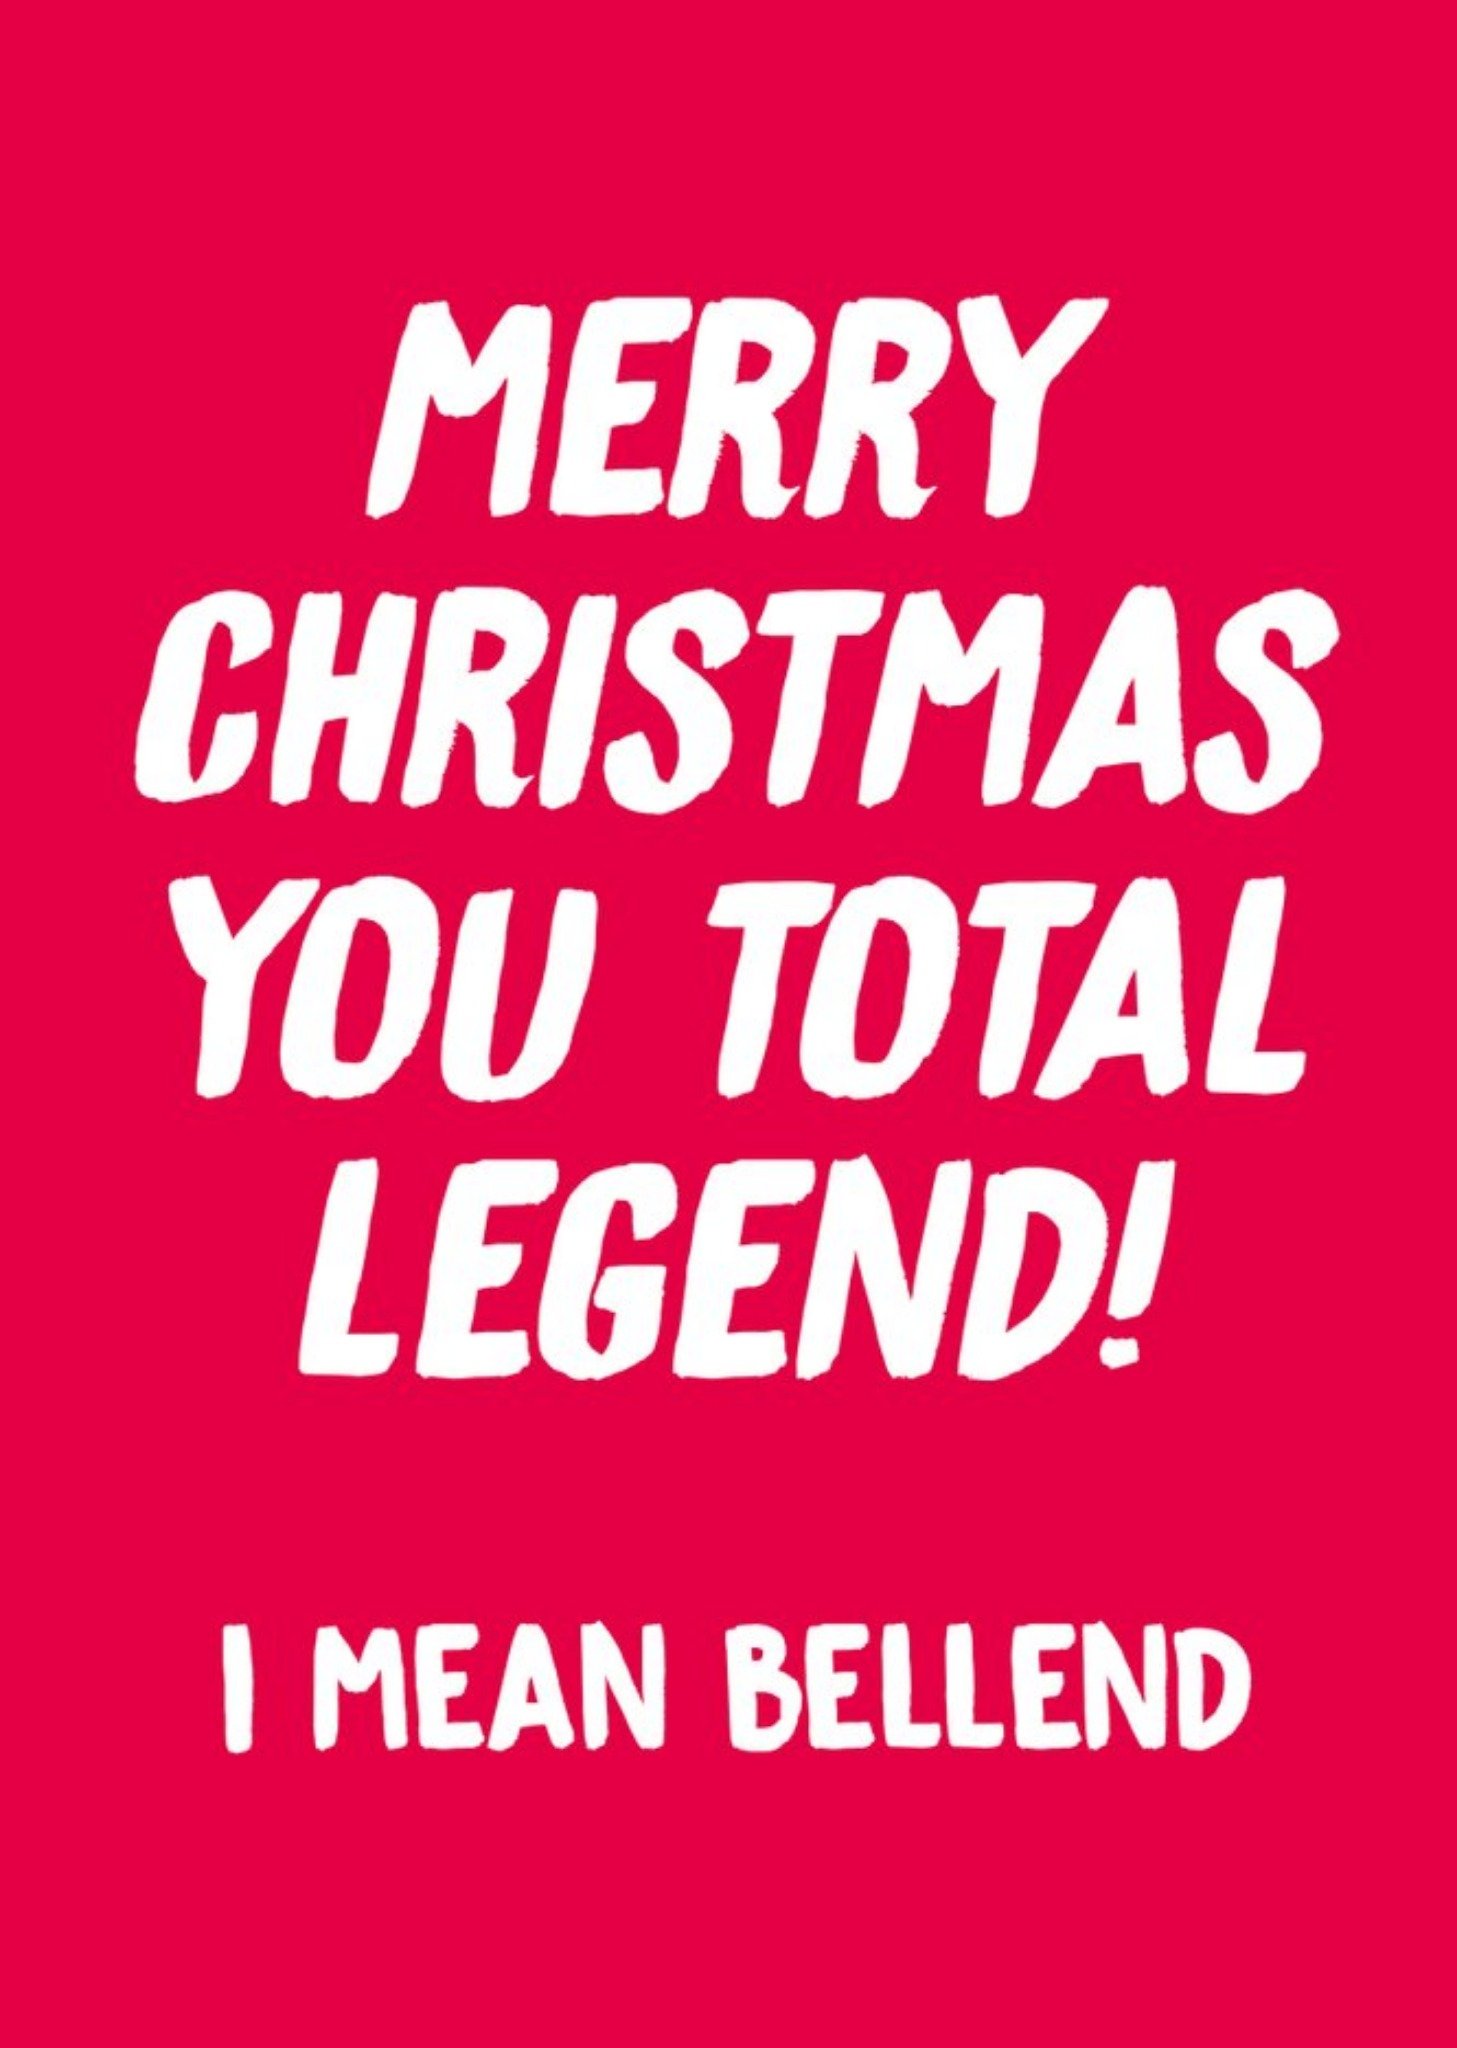 Moonpig Dean Morris Merry Christmas You Total Legend Christmas Card Ecard